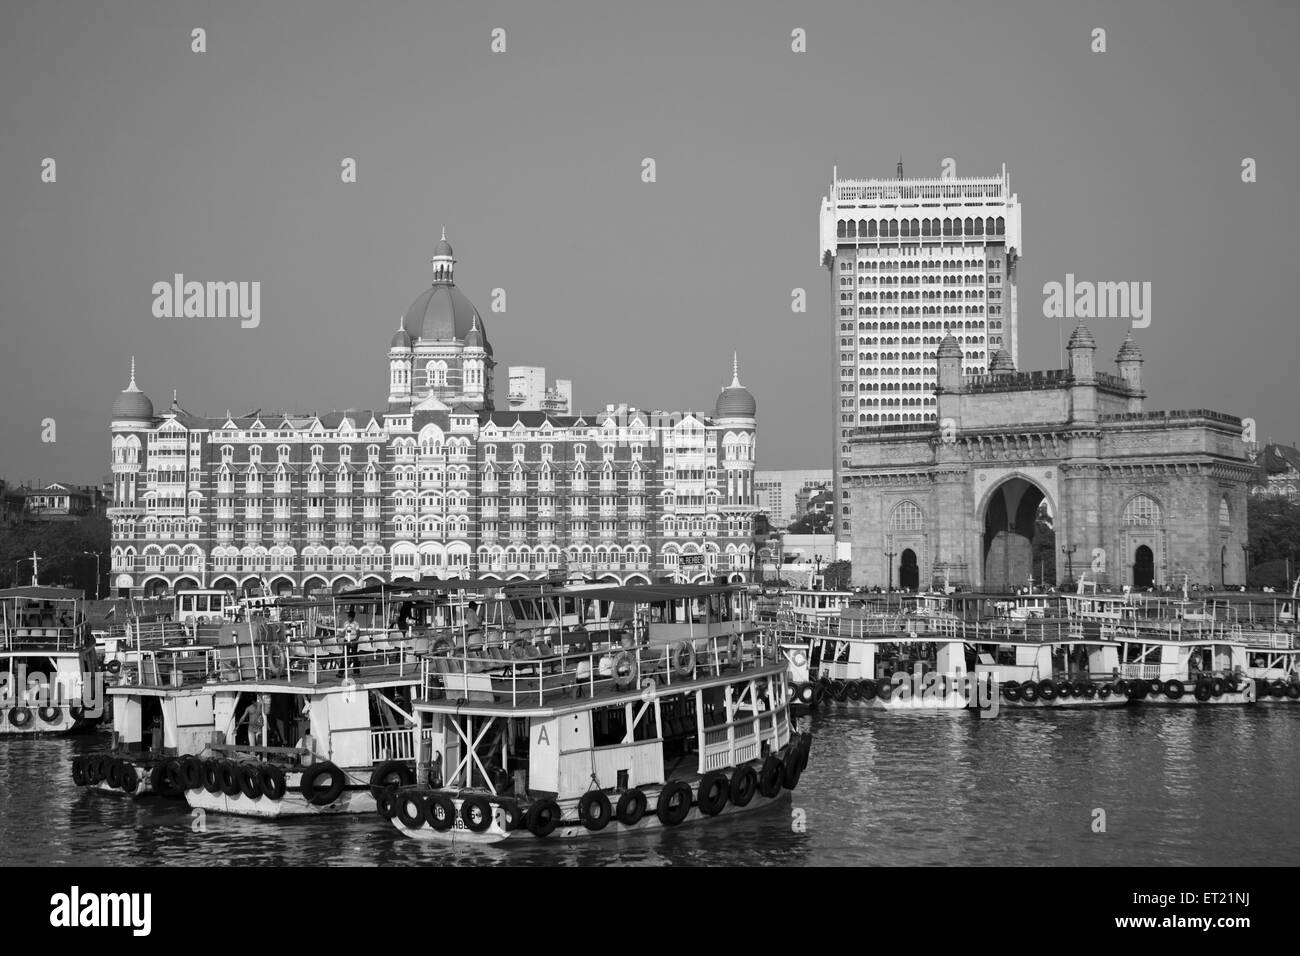 Gateway of India, Taj Mahal Hotel, Apollo Bunder, Colaba, Bombay, Mumbai, Maharashtra, India, Asia, Asian, Indian Stock Photo